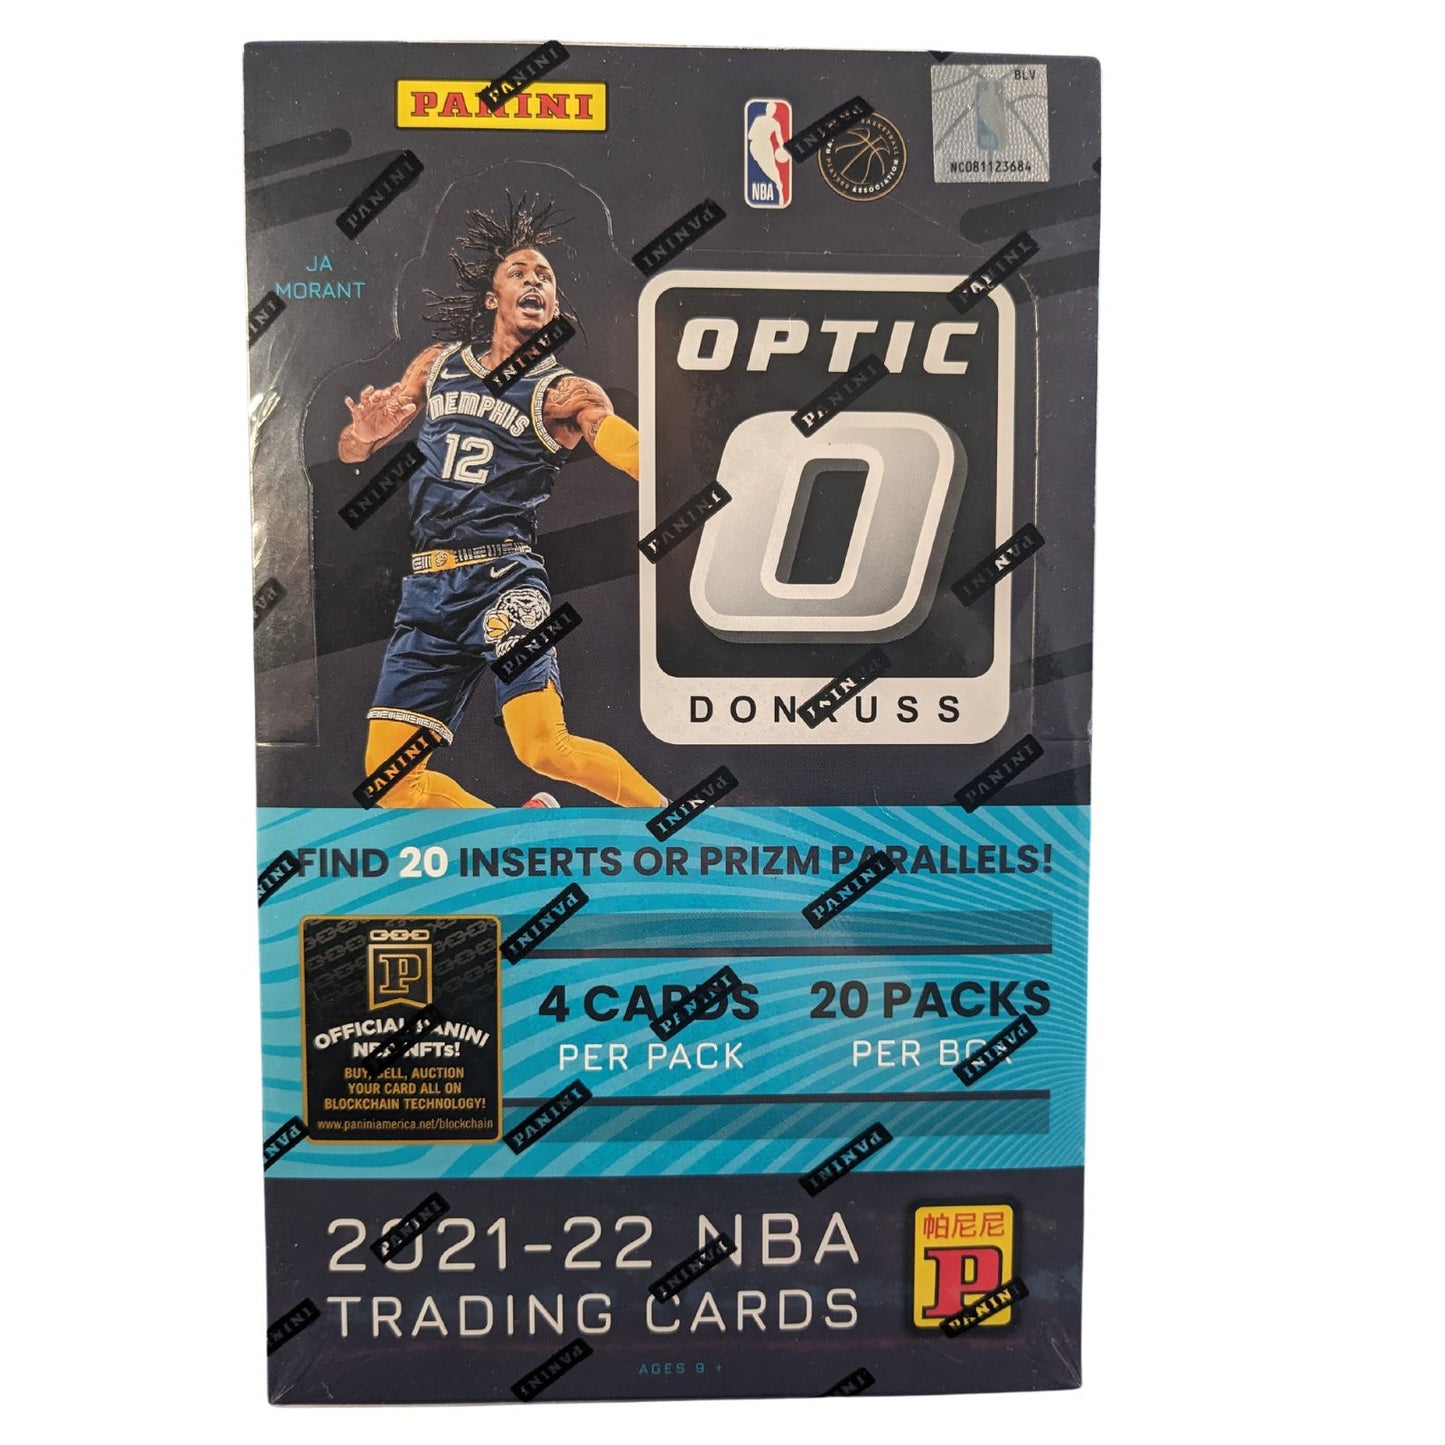 Sealed box of Optic Basketball Trading Cards 